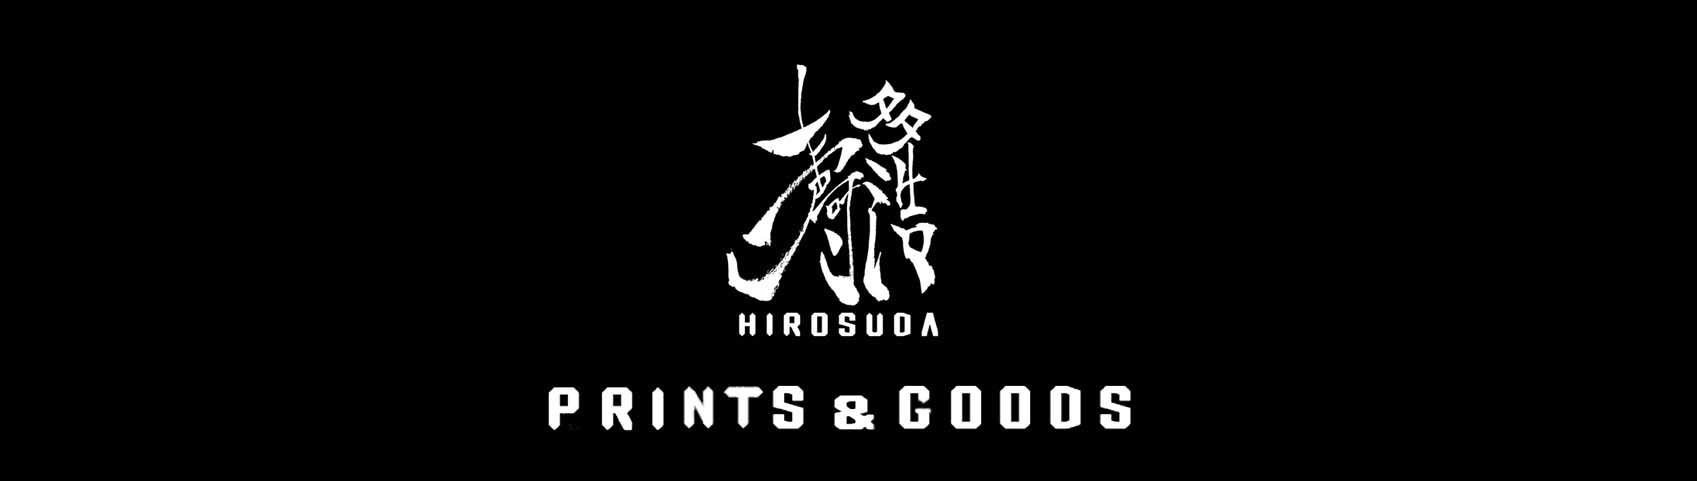 Hiro Suda Prints & Goods Store